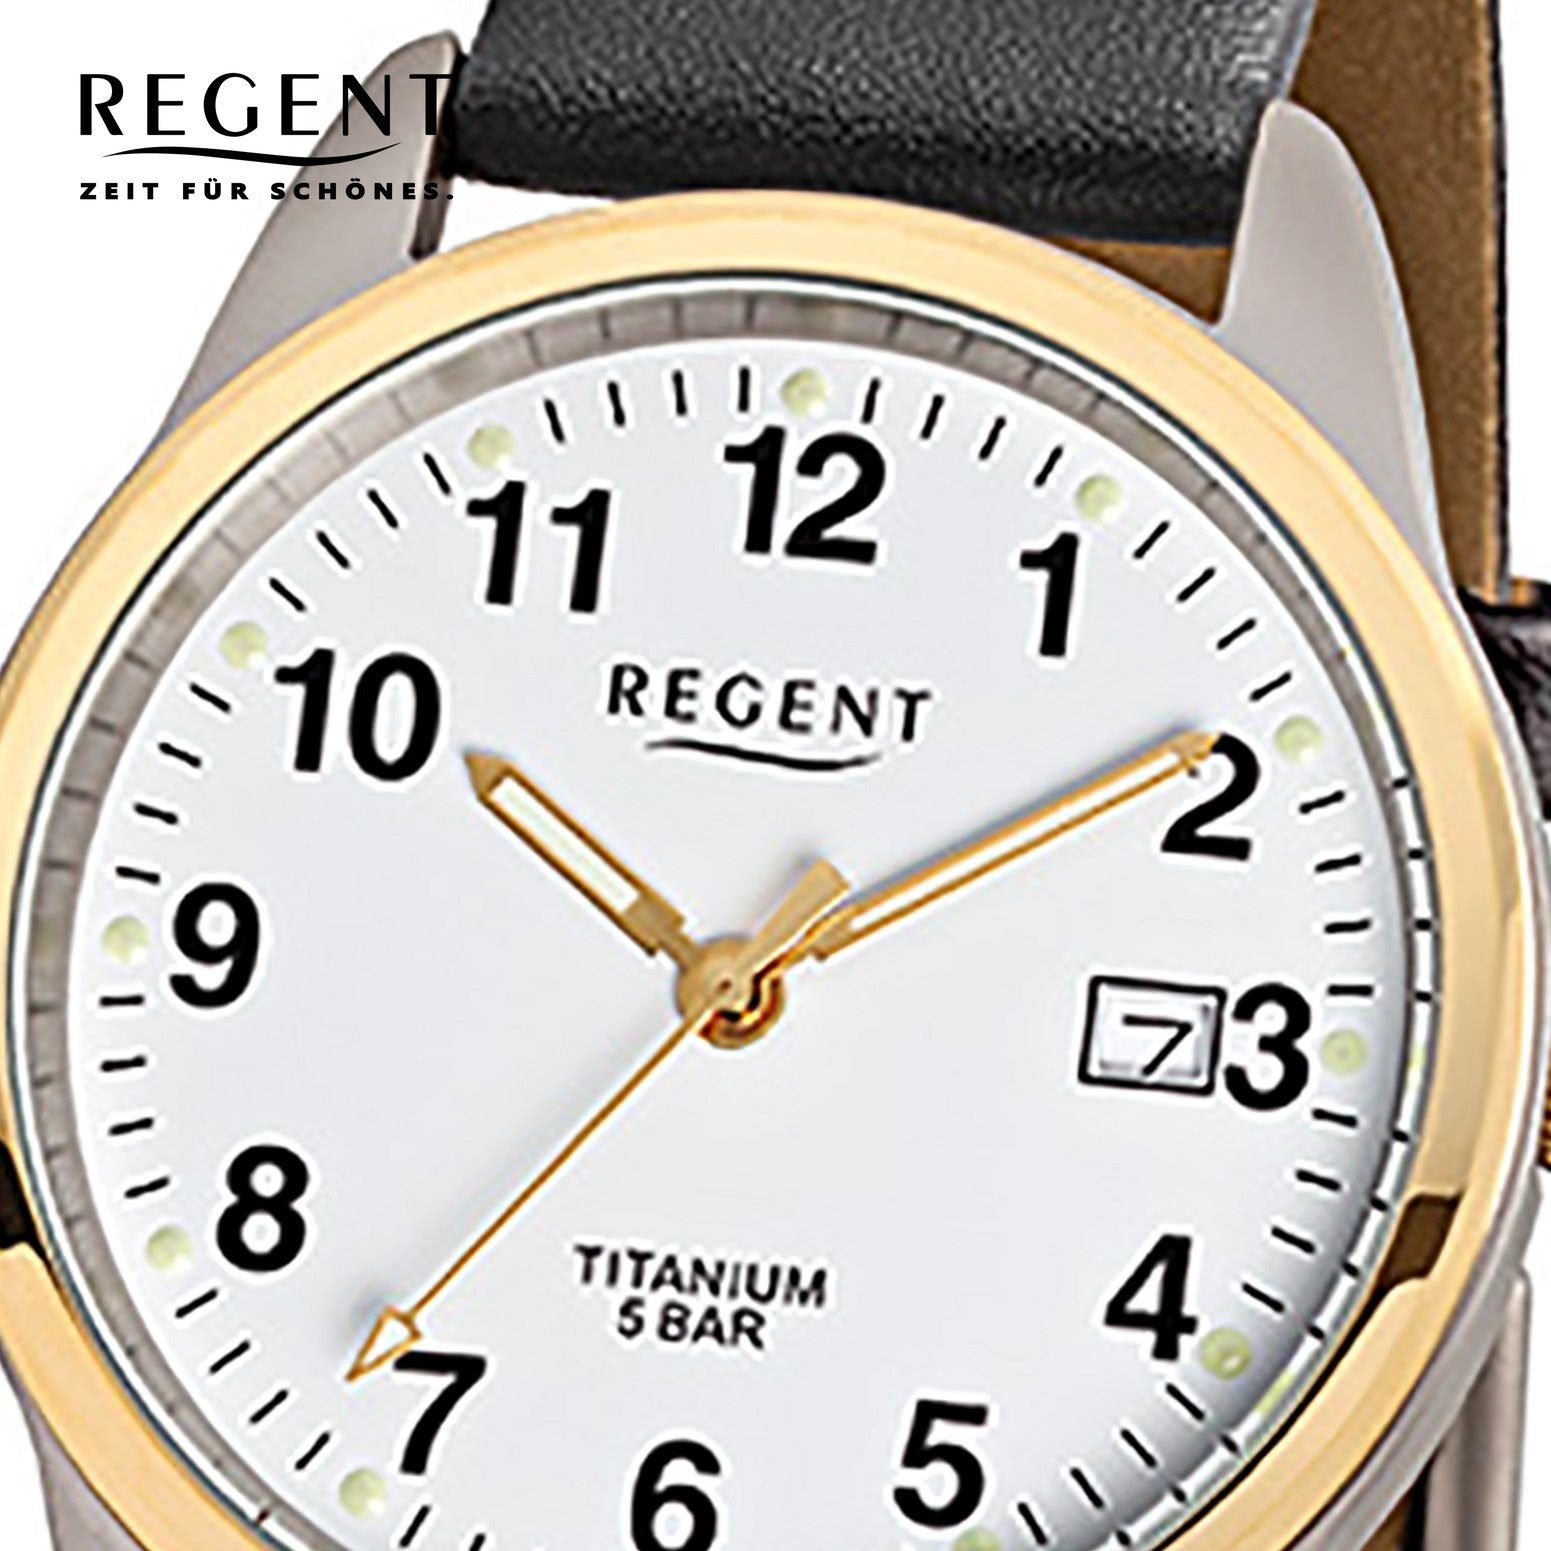 Analog, (ca. rund, Herren-Armbanduhr Regent 36mm), schwarz mittel Regent Lederarmband Armbanduhr Quarzuhr Herren